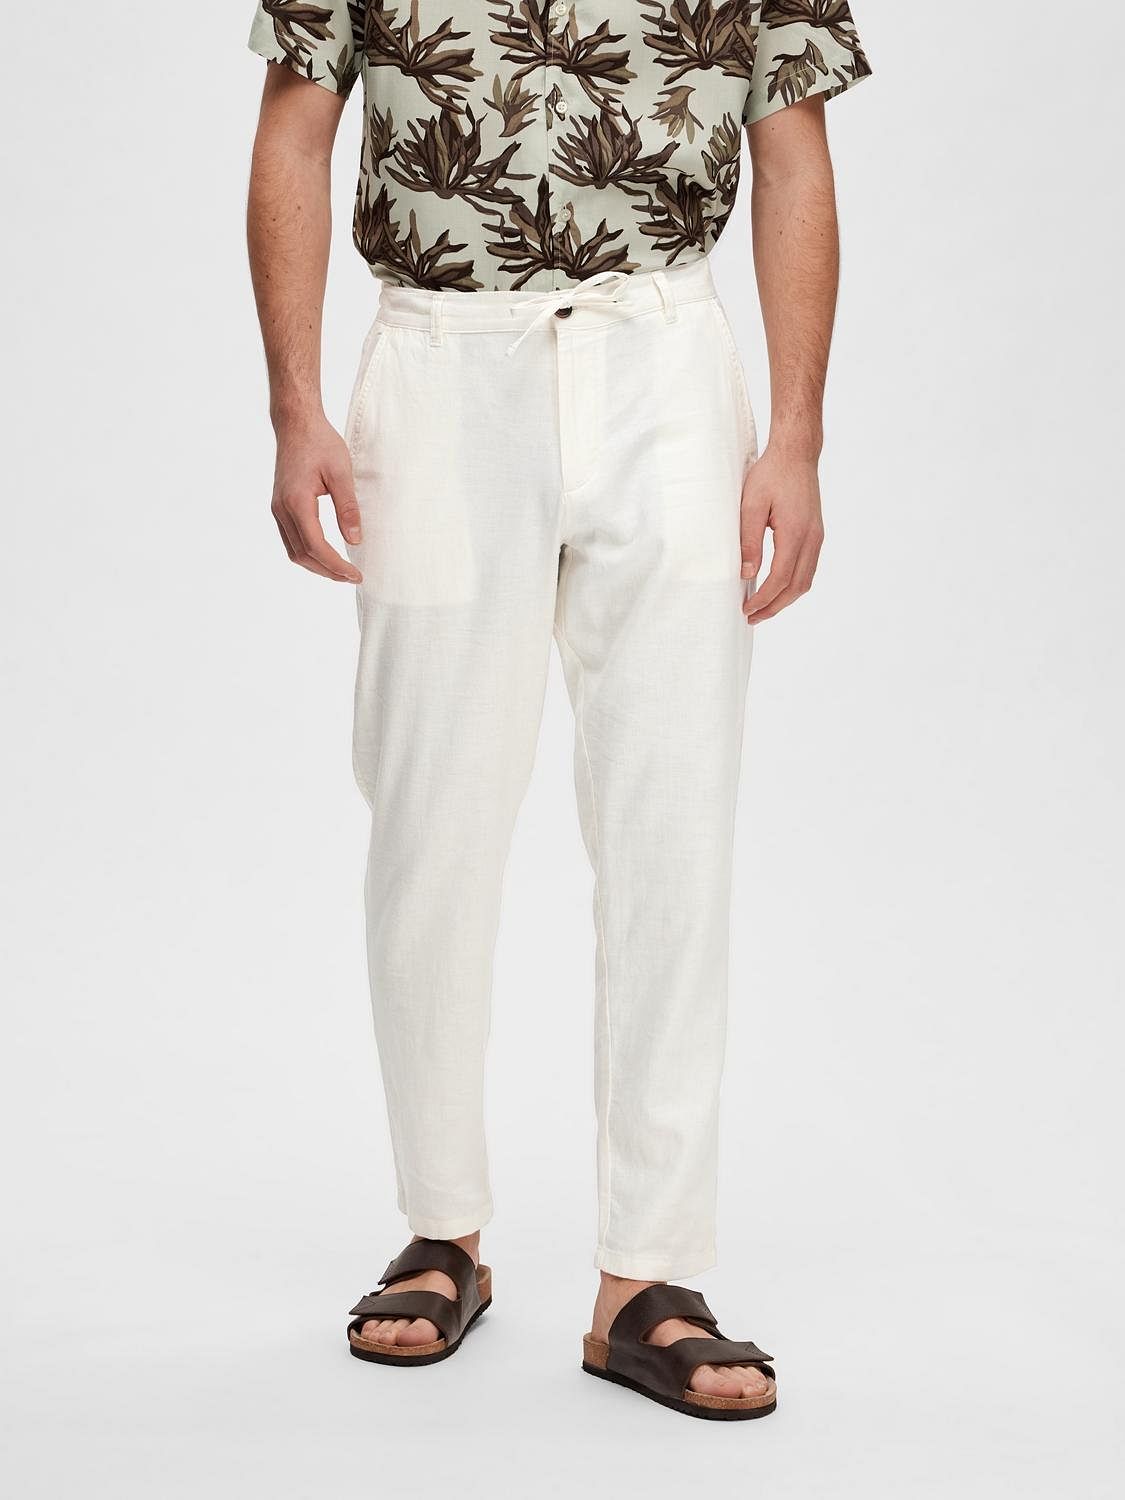 Buy Off White Trousers & Pants for Women by Diktmark Online | Ajio.com